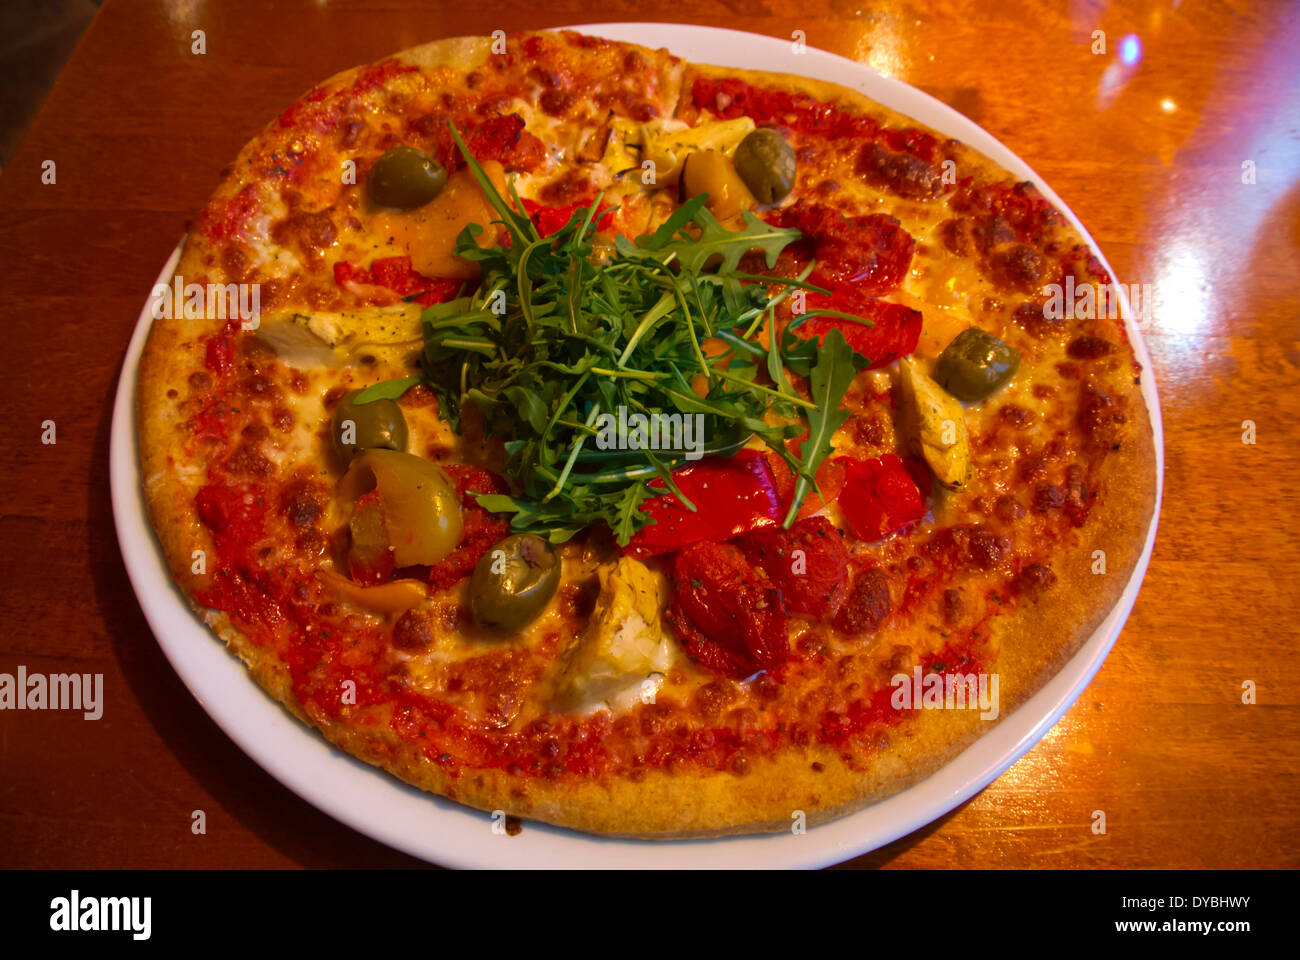 Pizza vegetariana con base de centeno, Helsinki, Finlandia, Europa Foto de stock